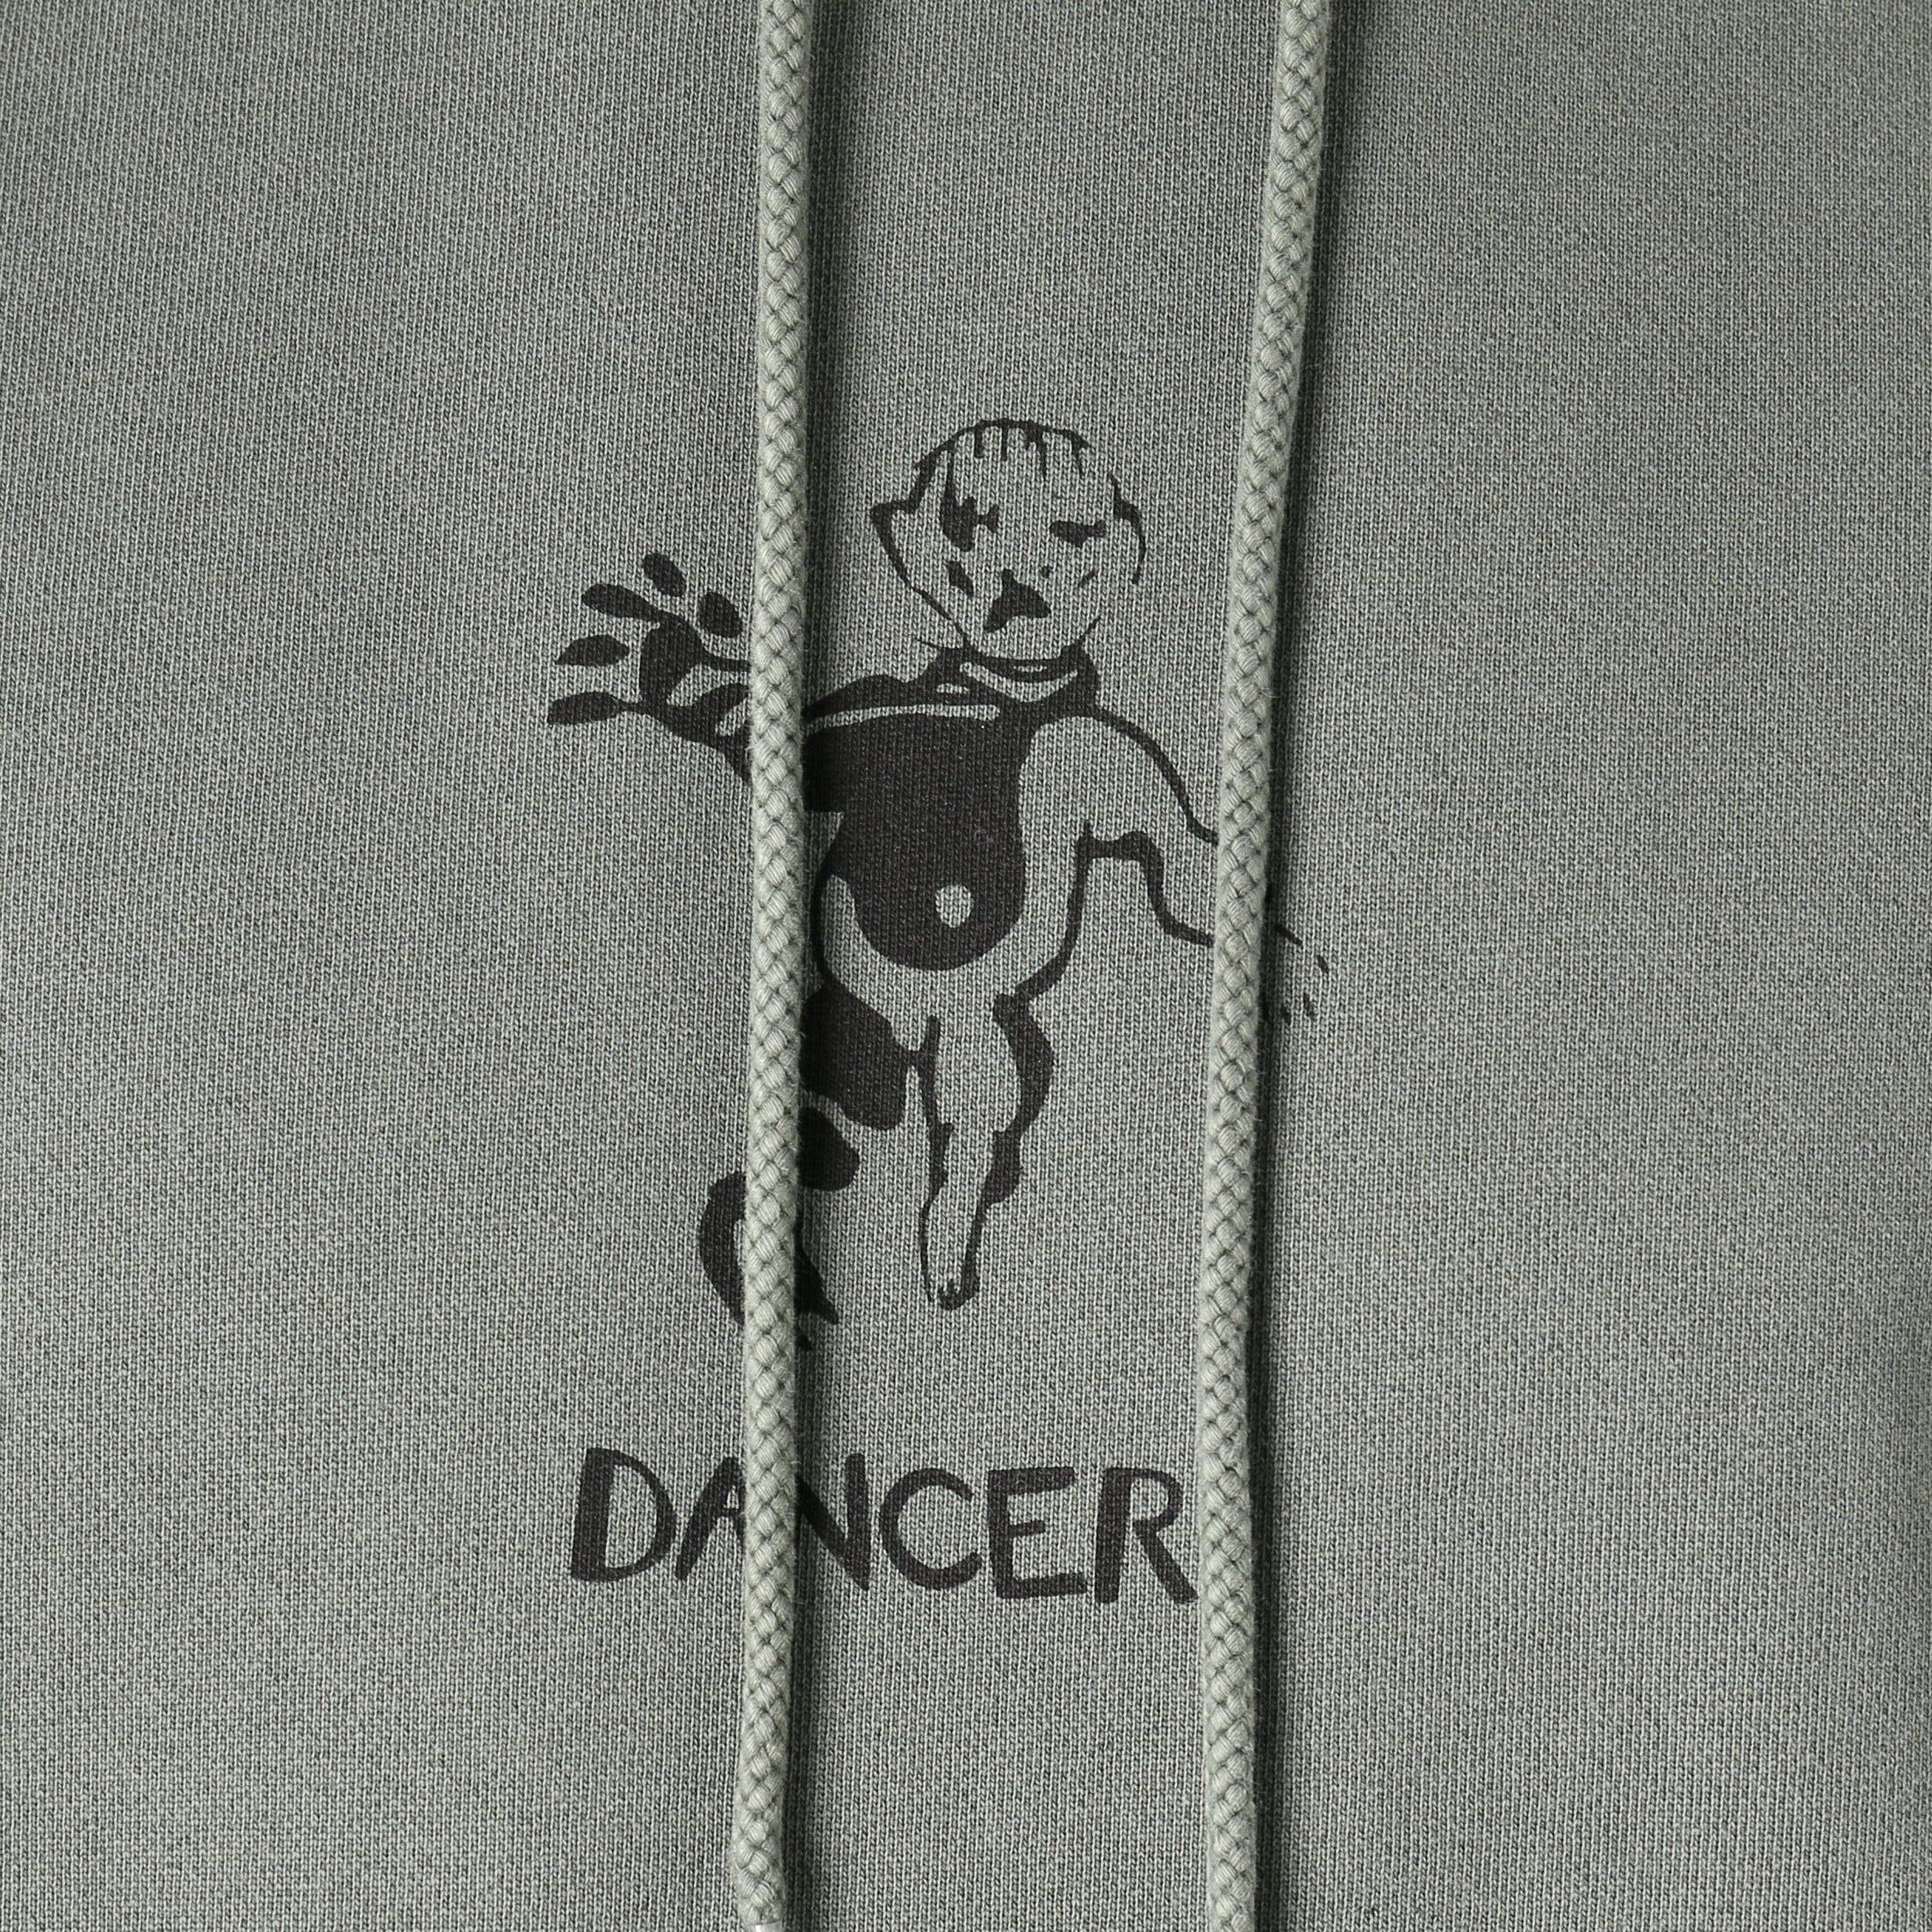 Dancer OG Logo Hoodie Green